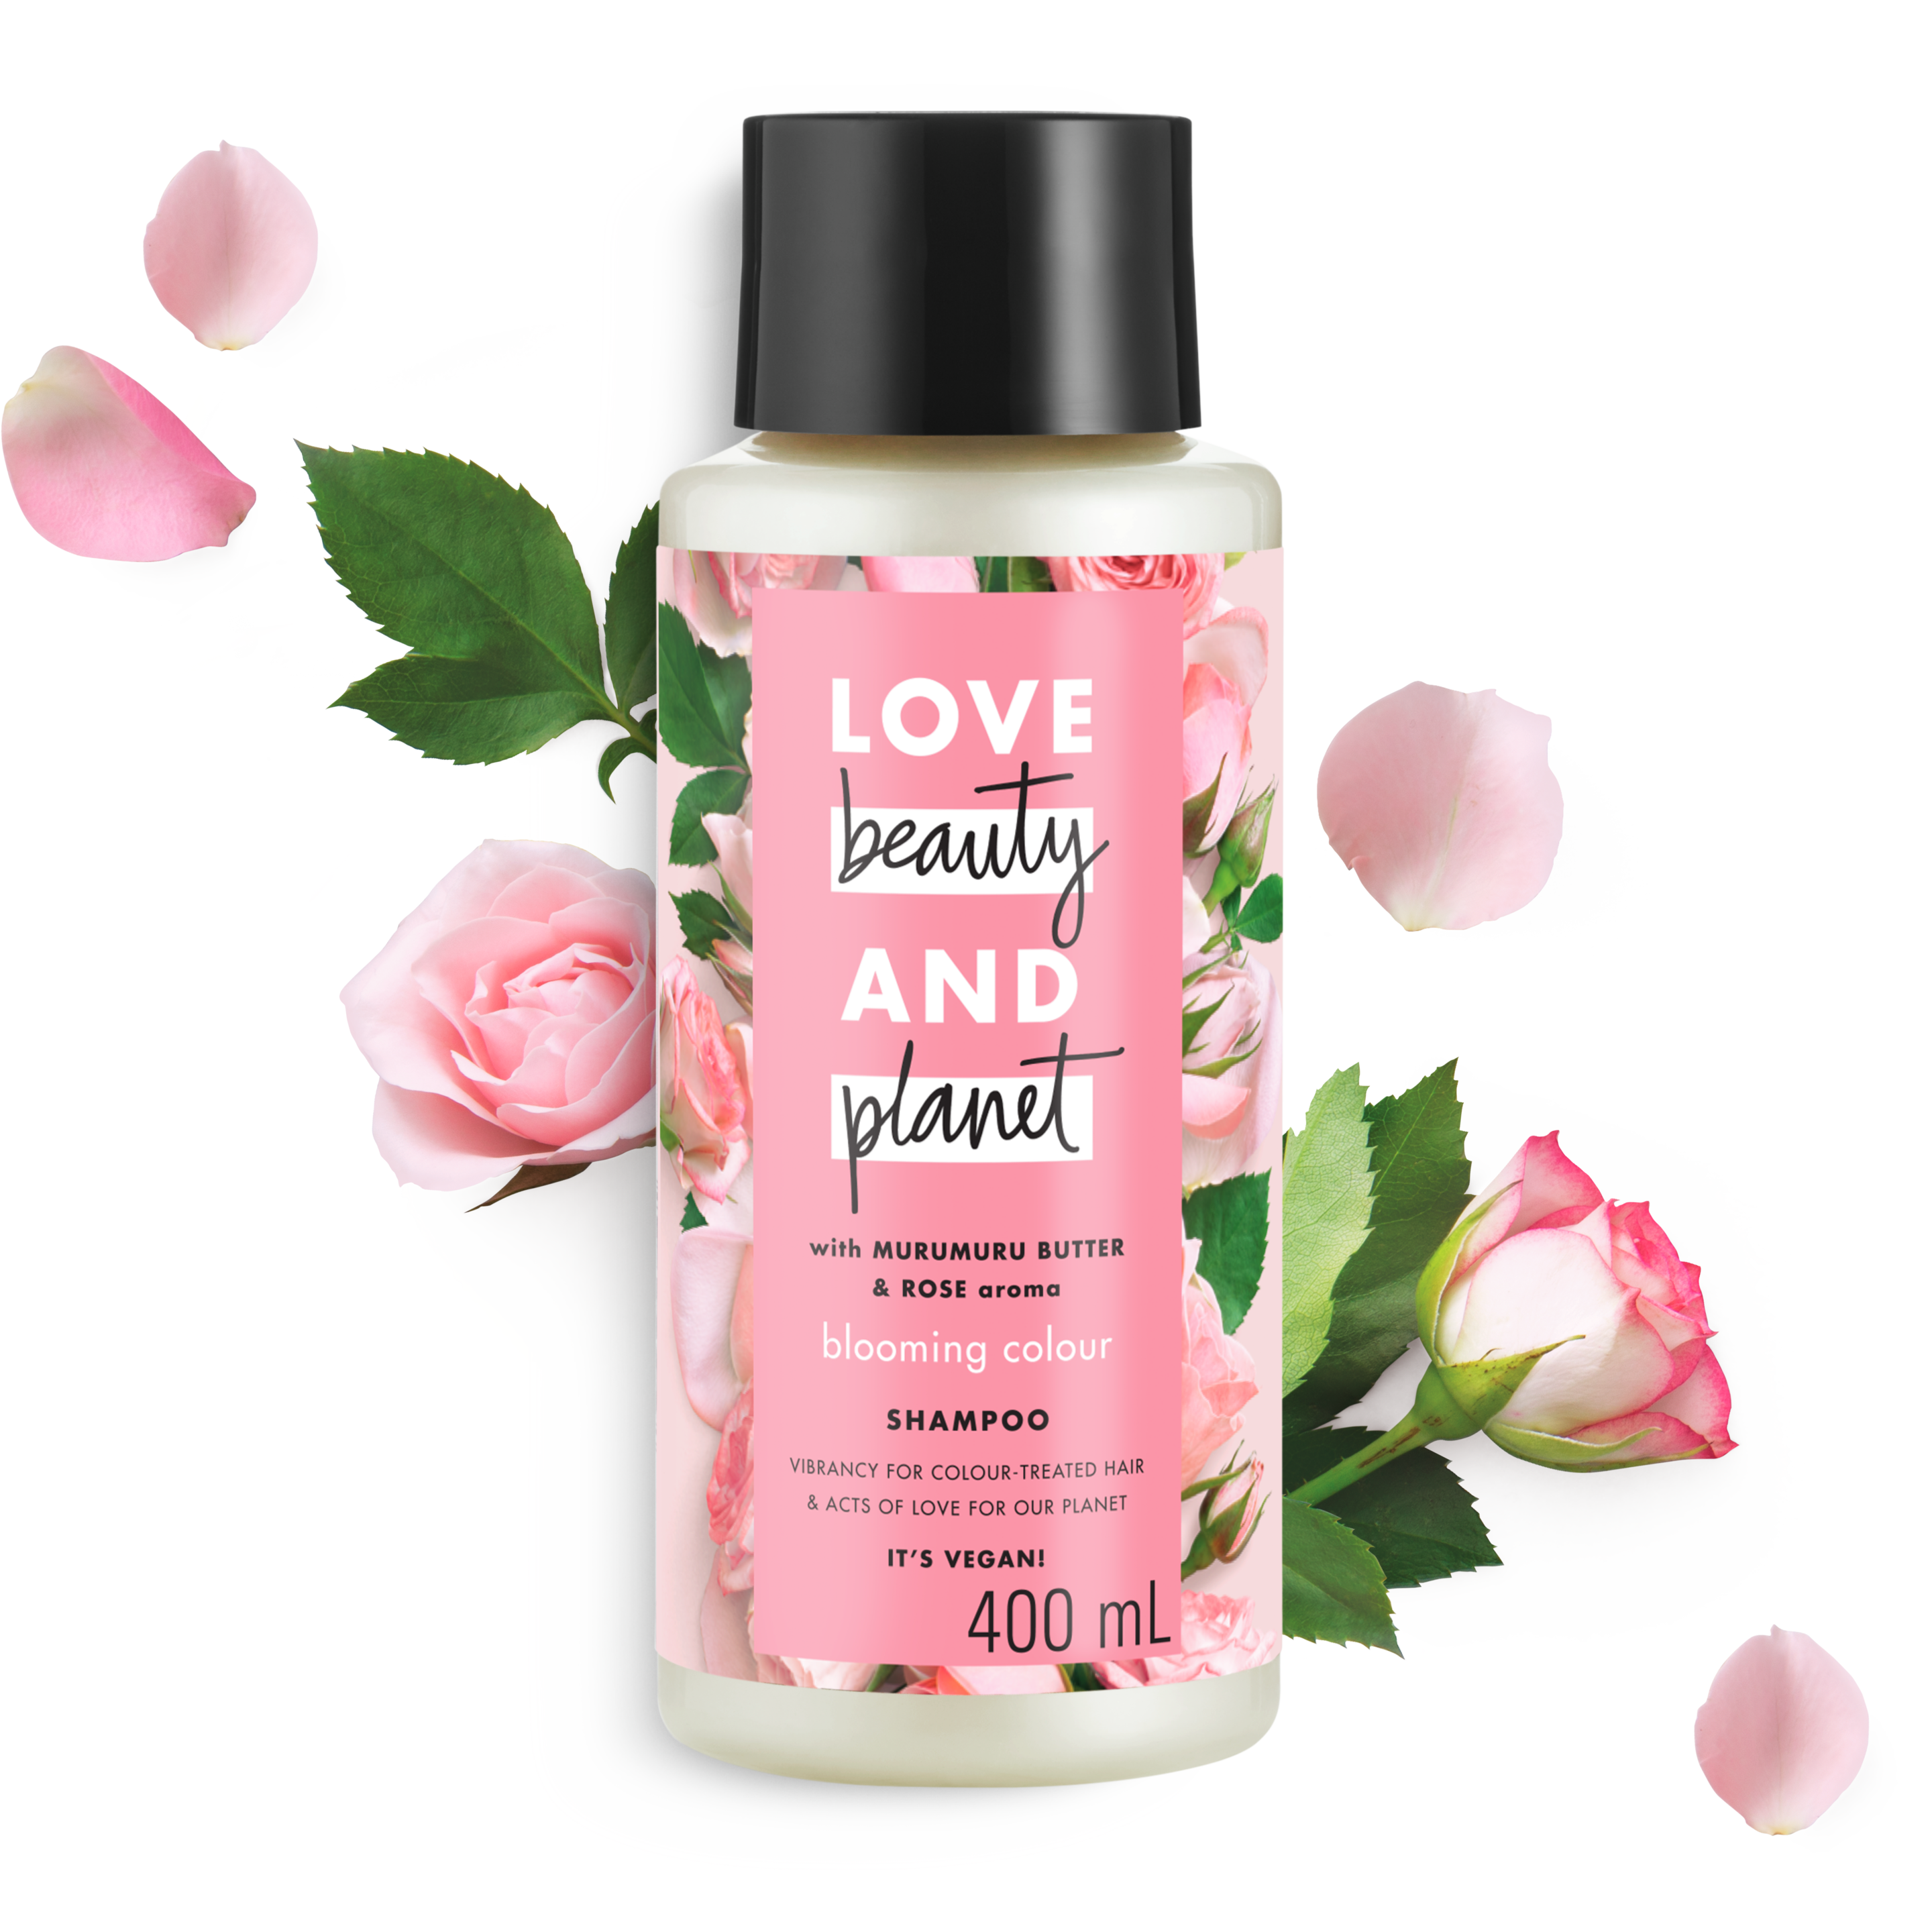 Tampak depan kemasan Love Beauty and Planet Murumuru Butter & Rose Shampoo ukuran 400 ml Text